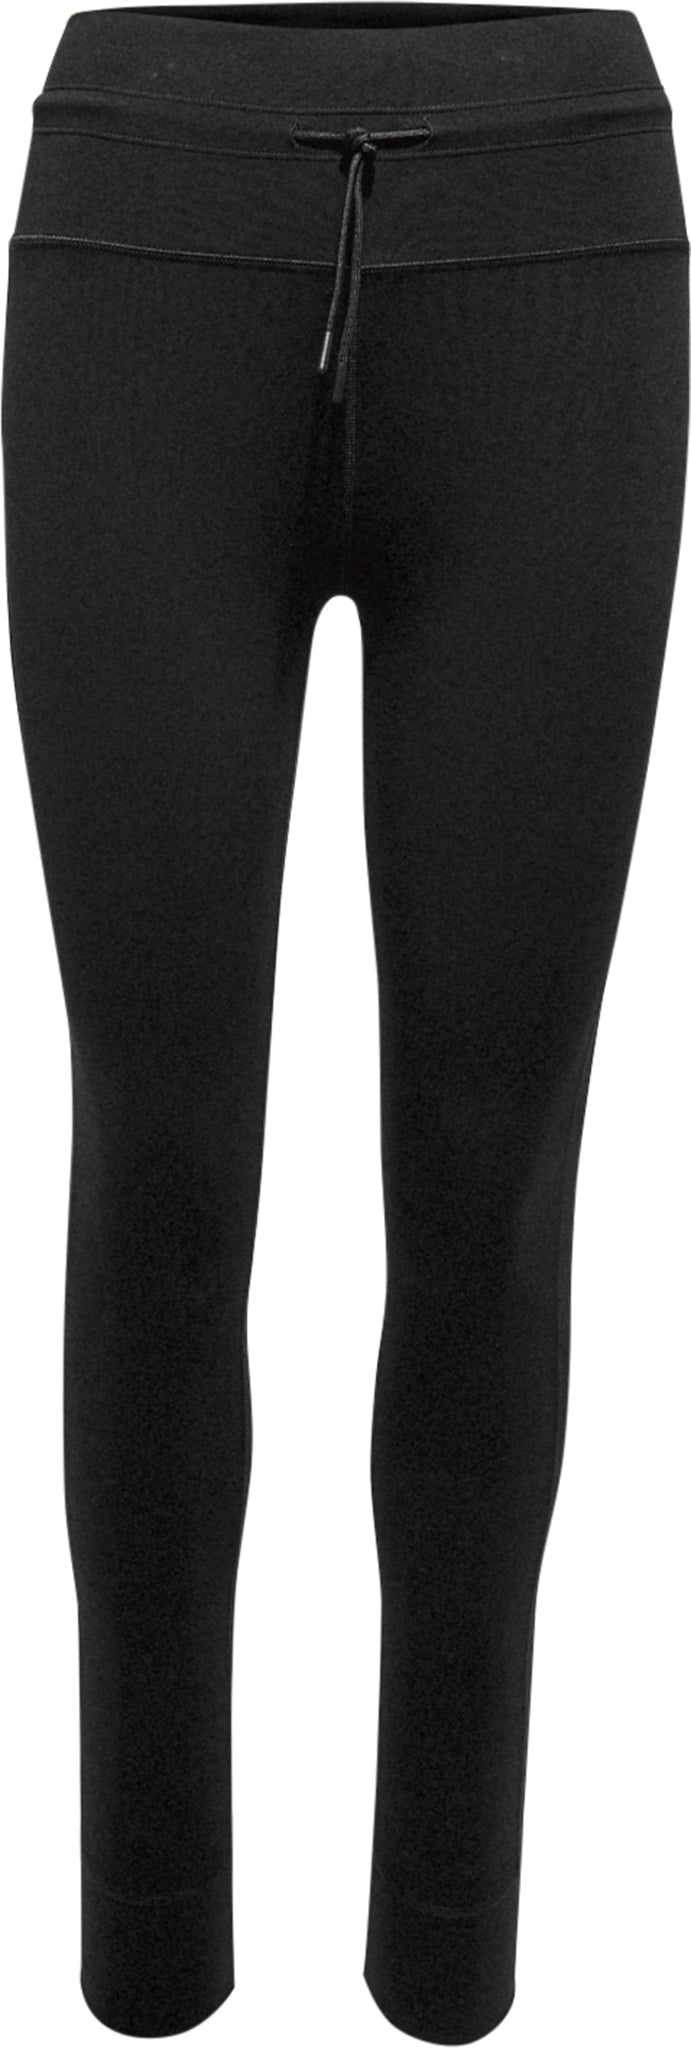 KT Buttery Soft Leggings for Women - High Waisted Leggings Pants with  Pockets